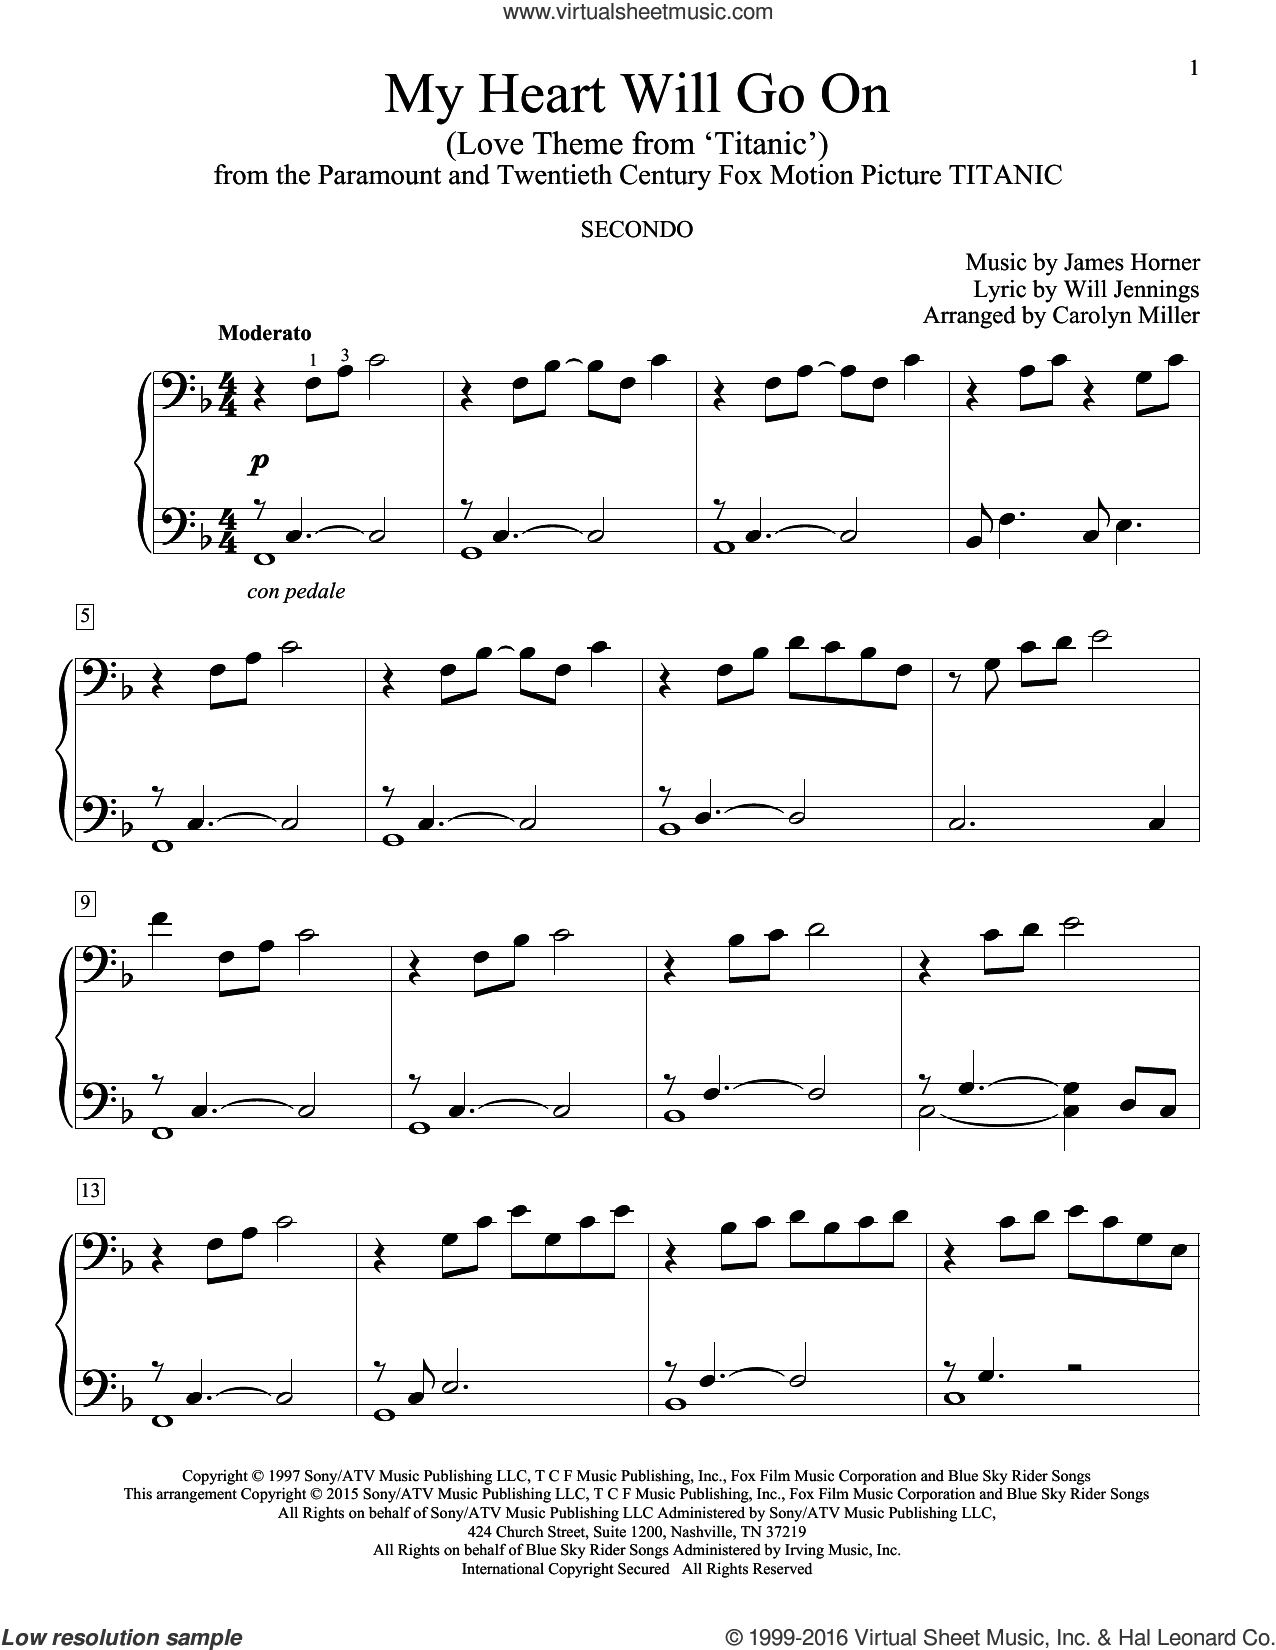 raif husicic piano music sheet pdf